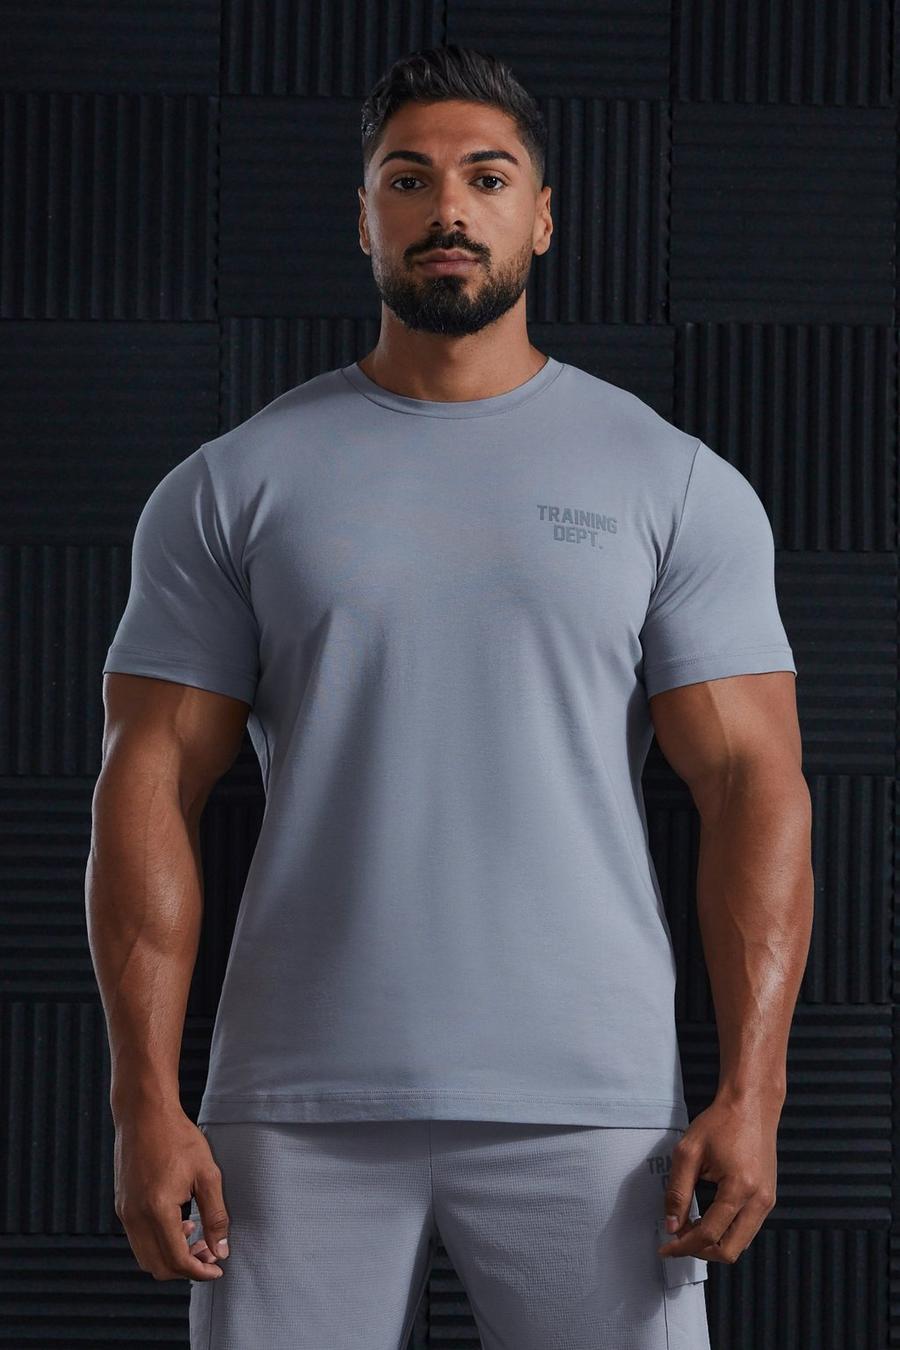 T-shirt Active Training Dept per alta performance, Light grey grigio